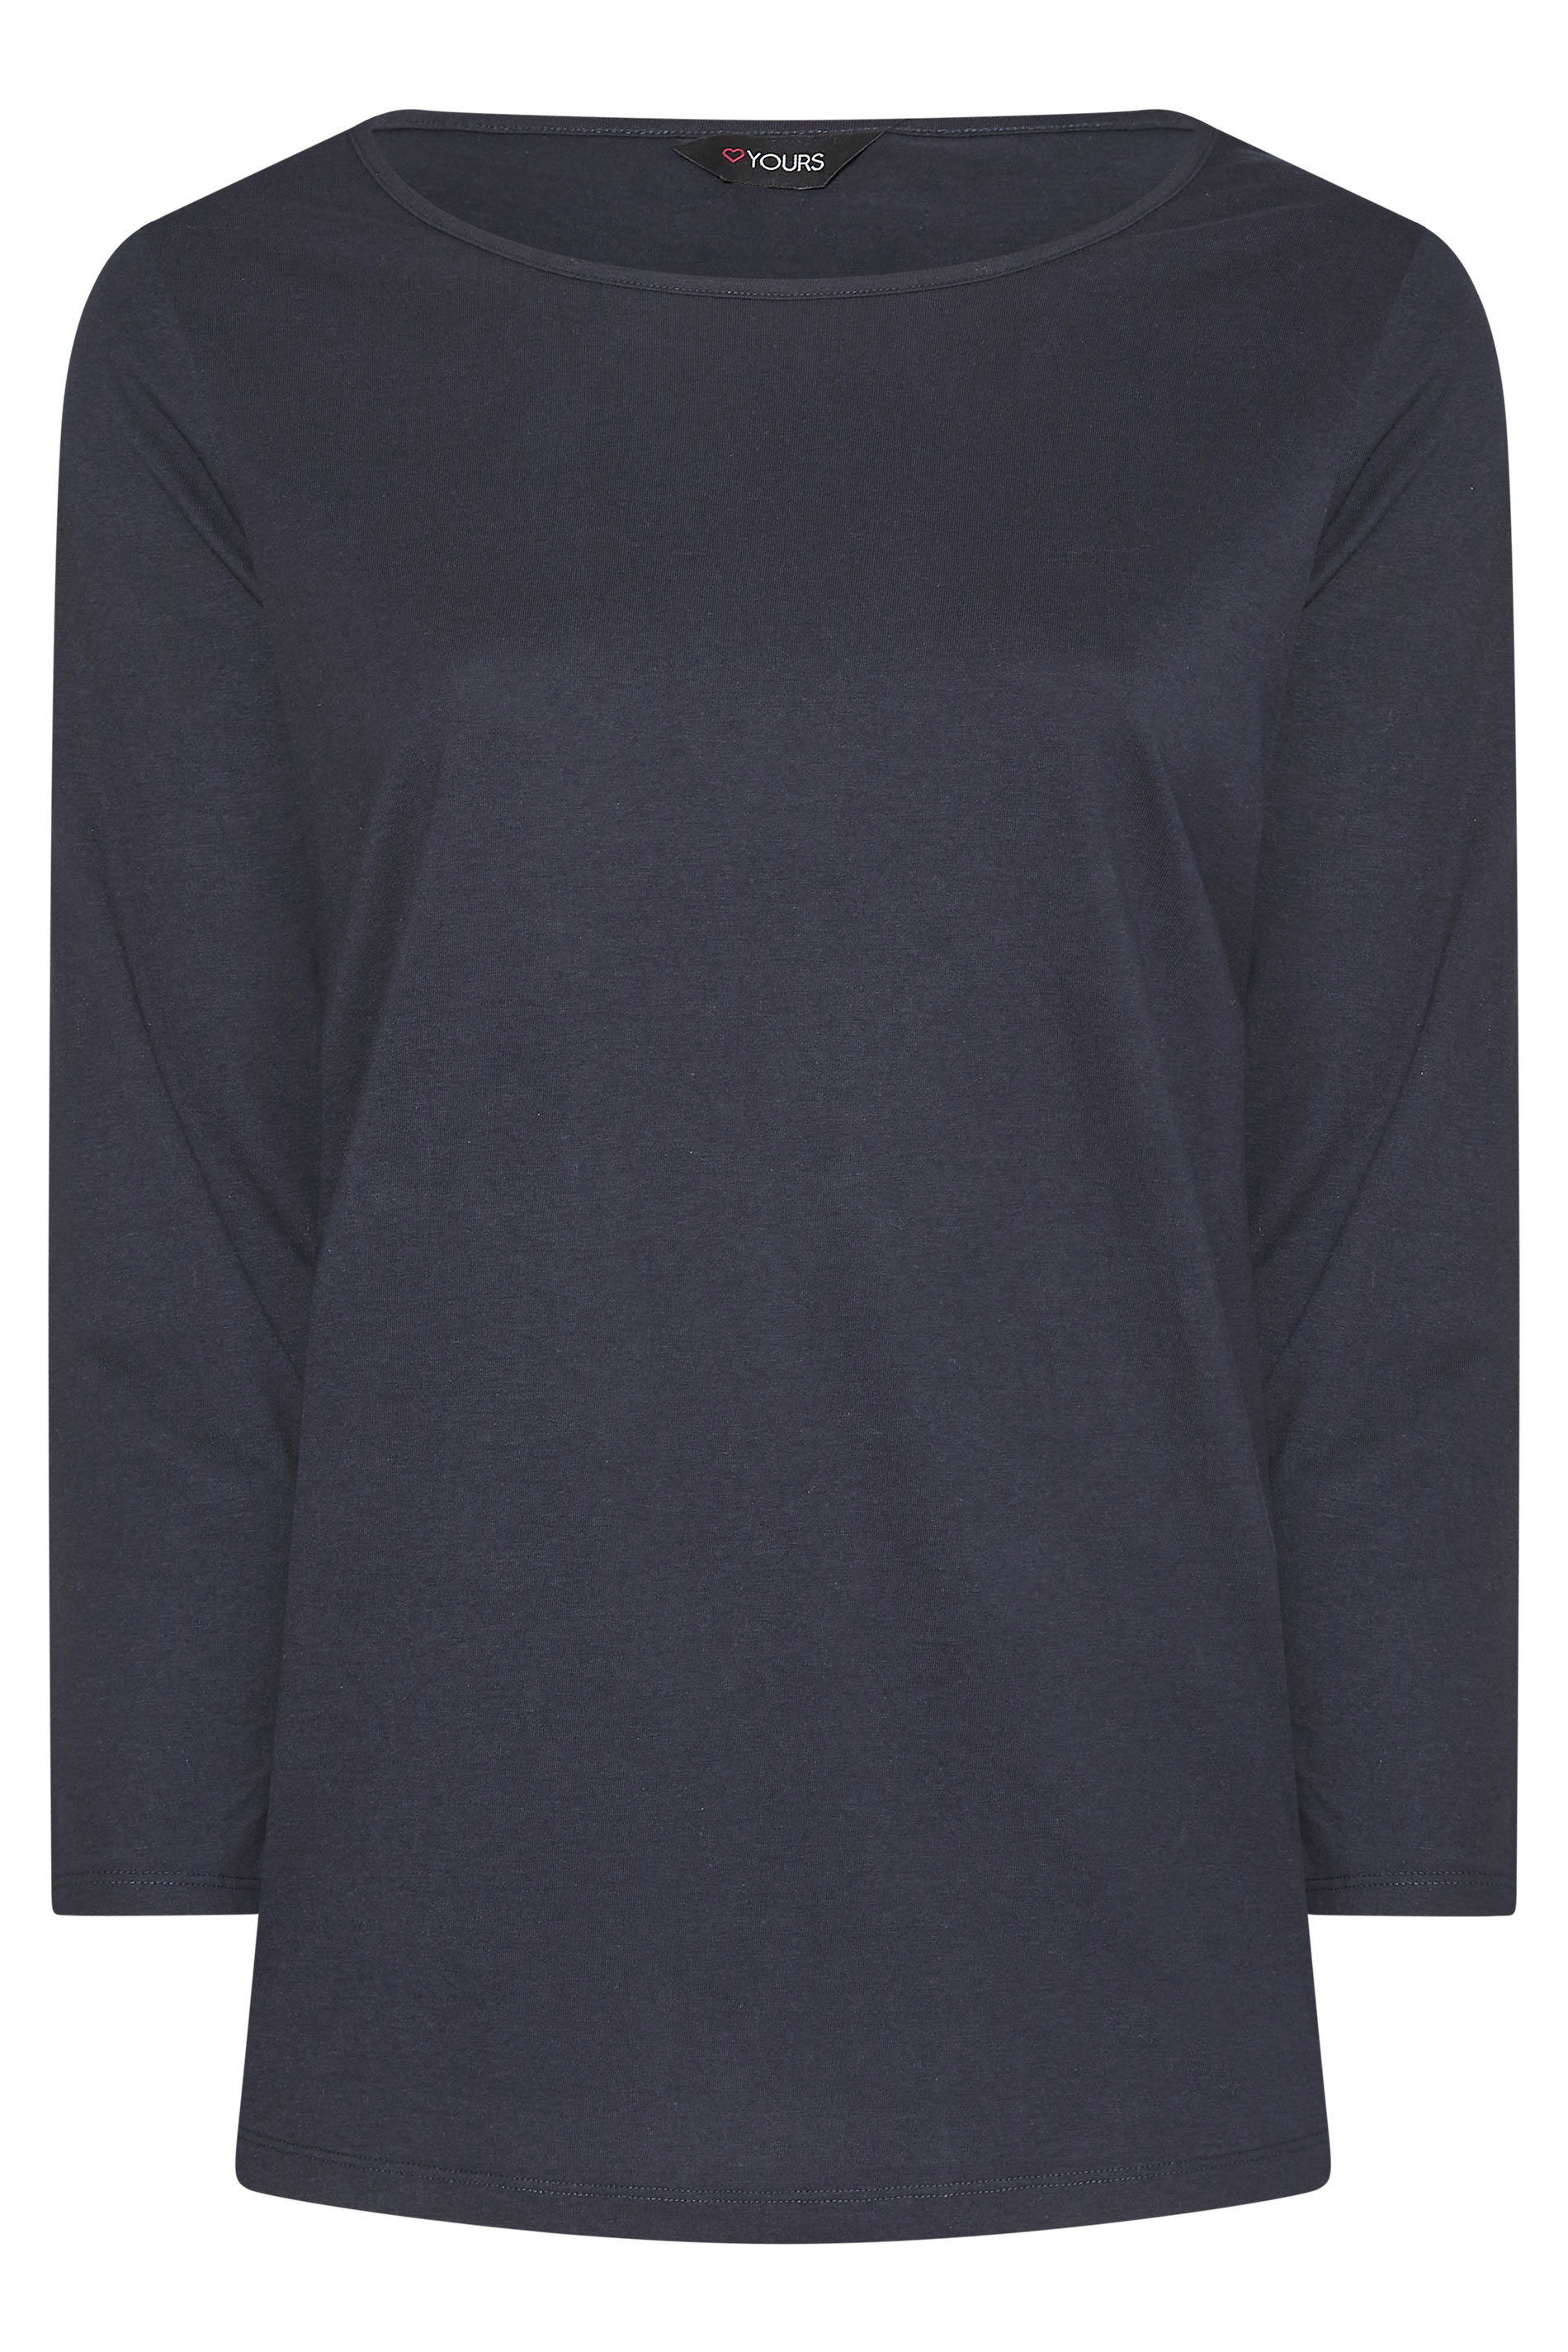 Grande taille  Tops Grande taille  Tops à Manches Longues | T-Shirt Bleu Marine Manches Longues en Jersey - IV43249